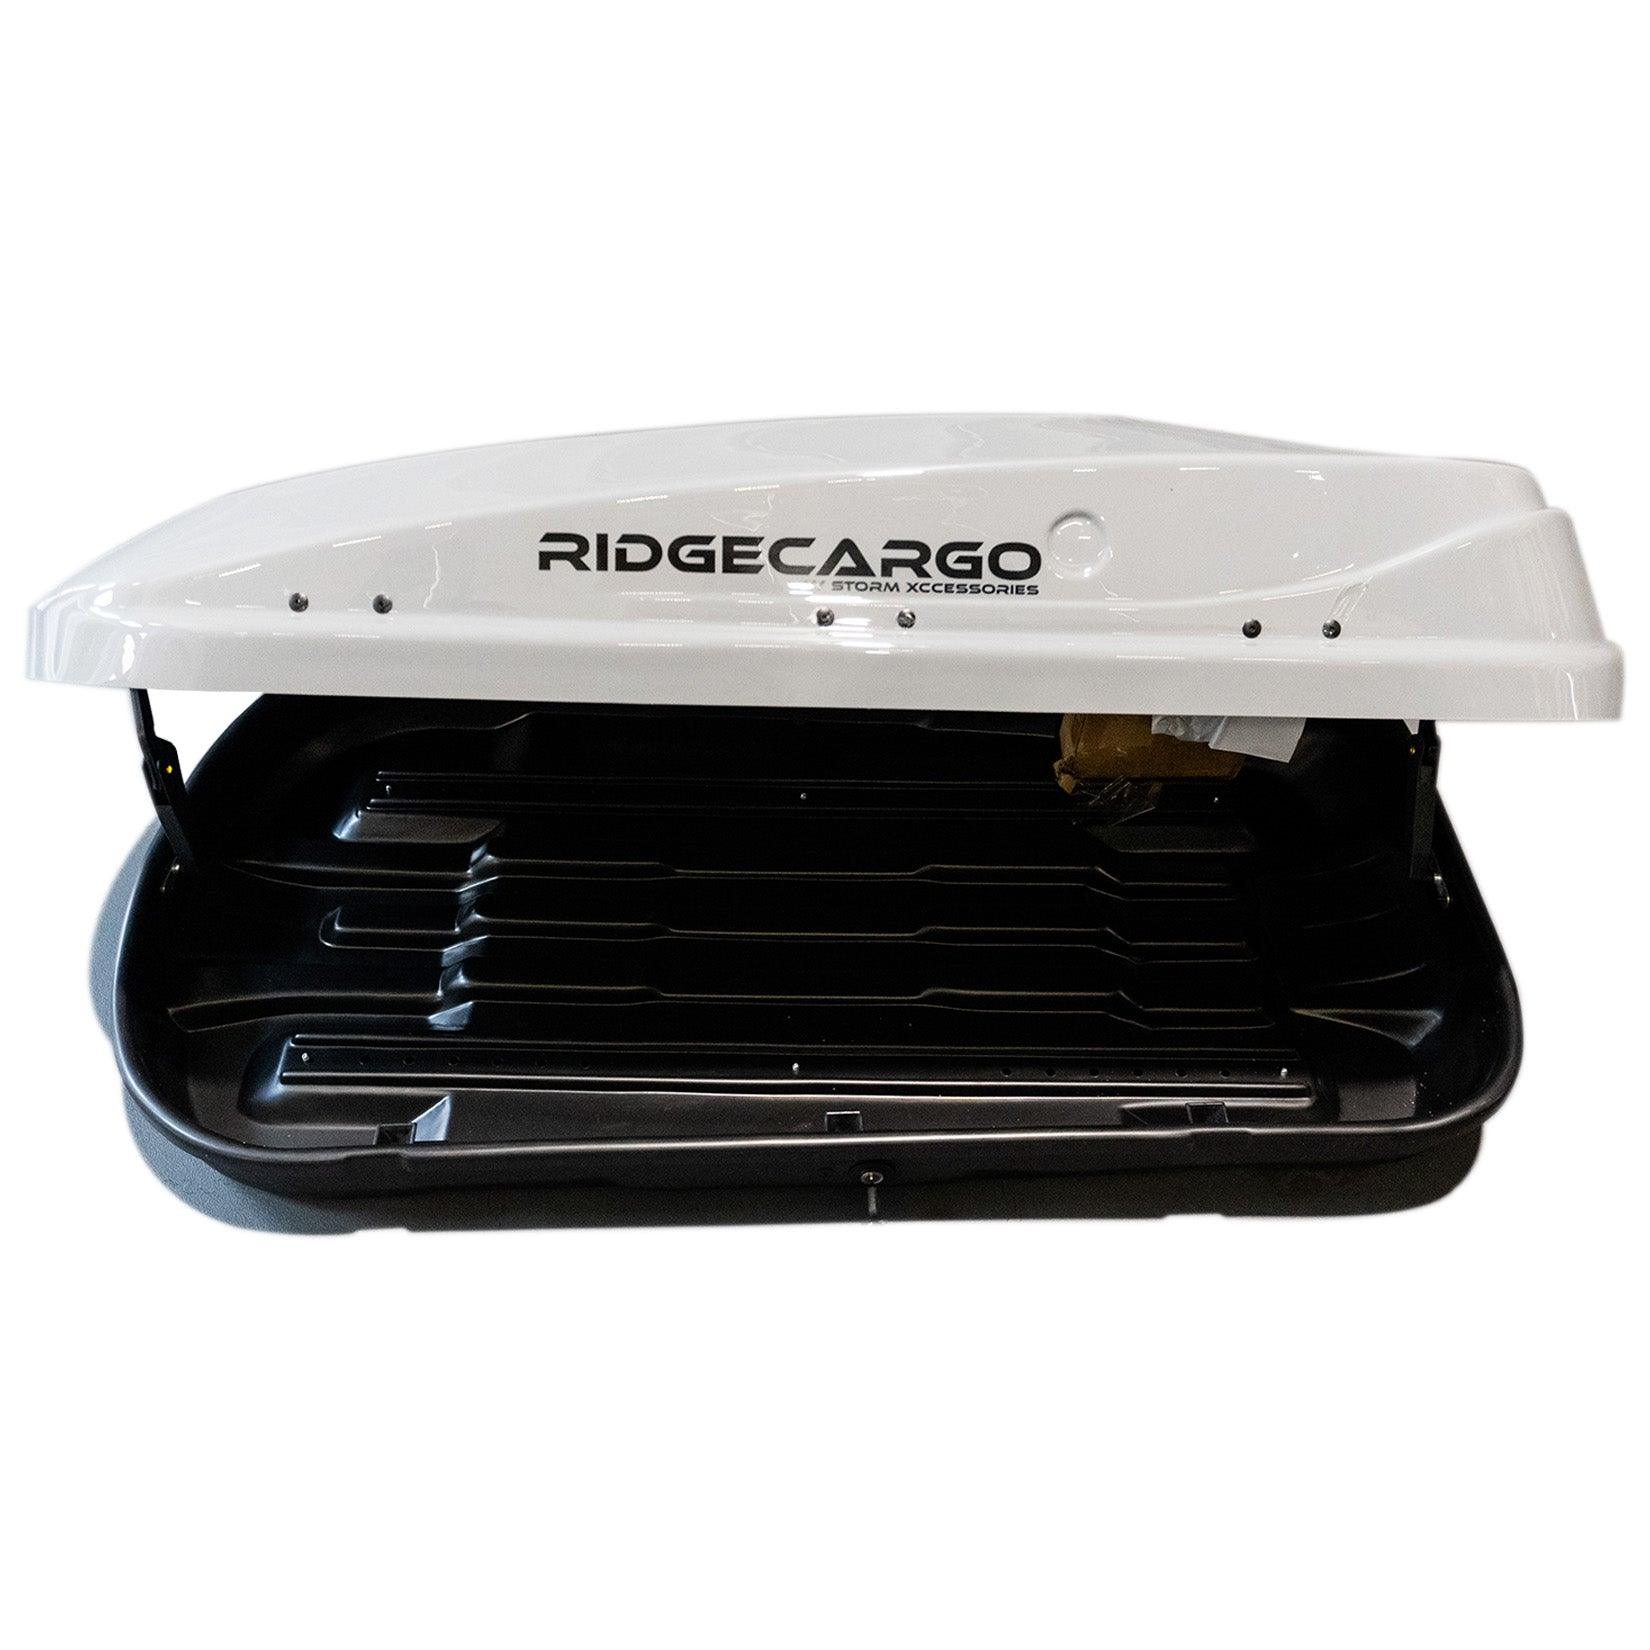 RIDGECARGO SERIES 400L ROOF BOX IN GREY - 1450 X 370 X 790CM - Storm Xccessories